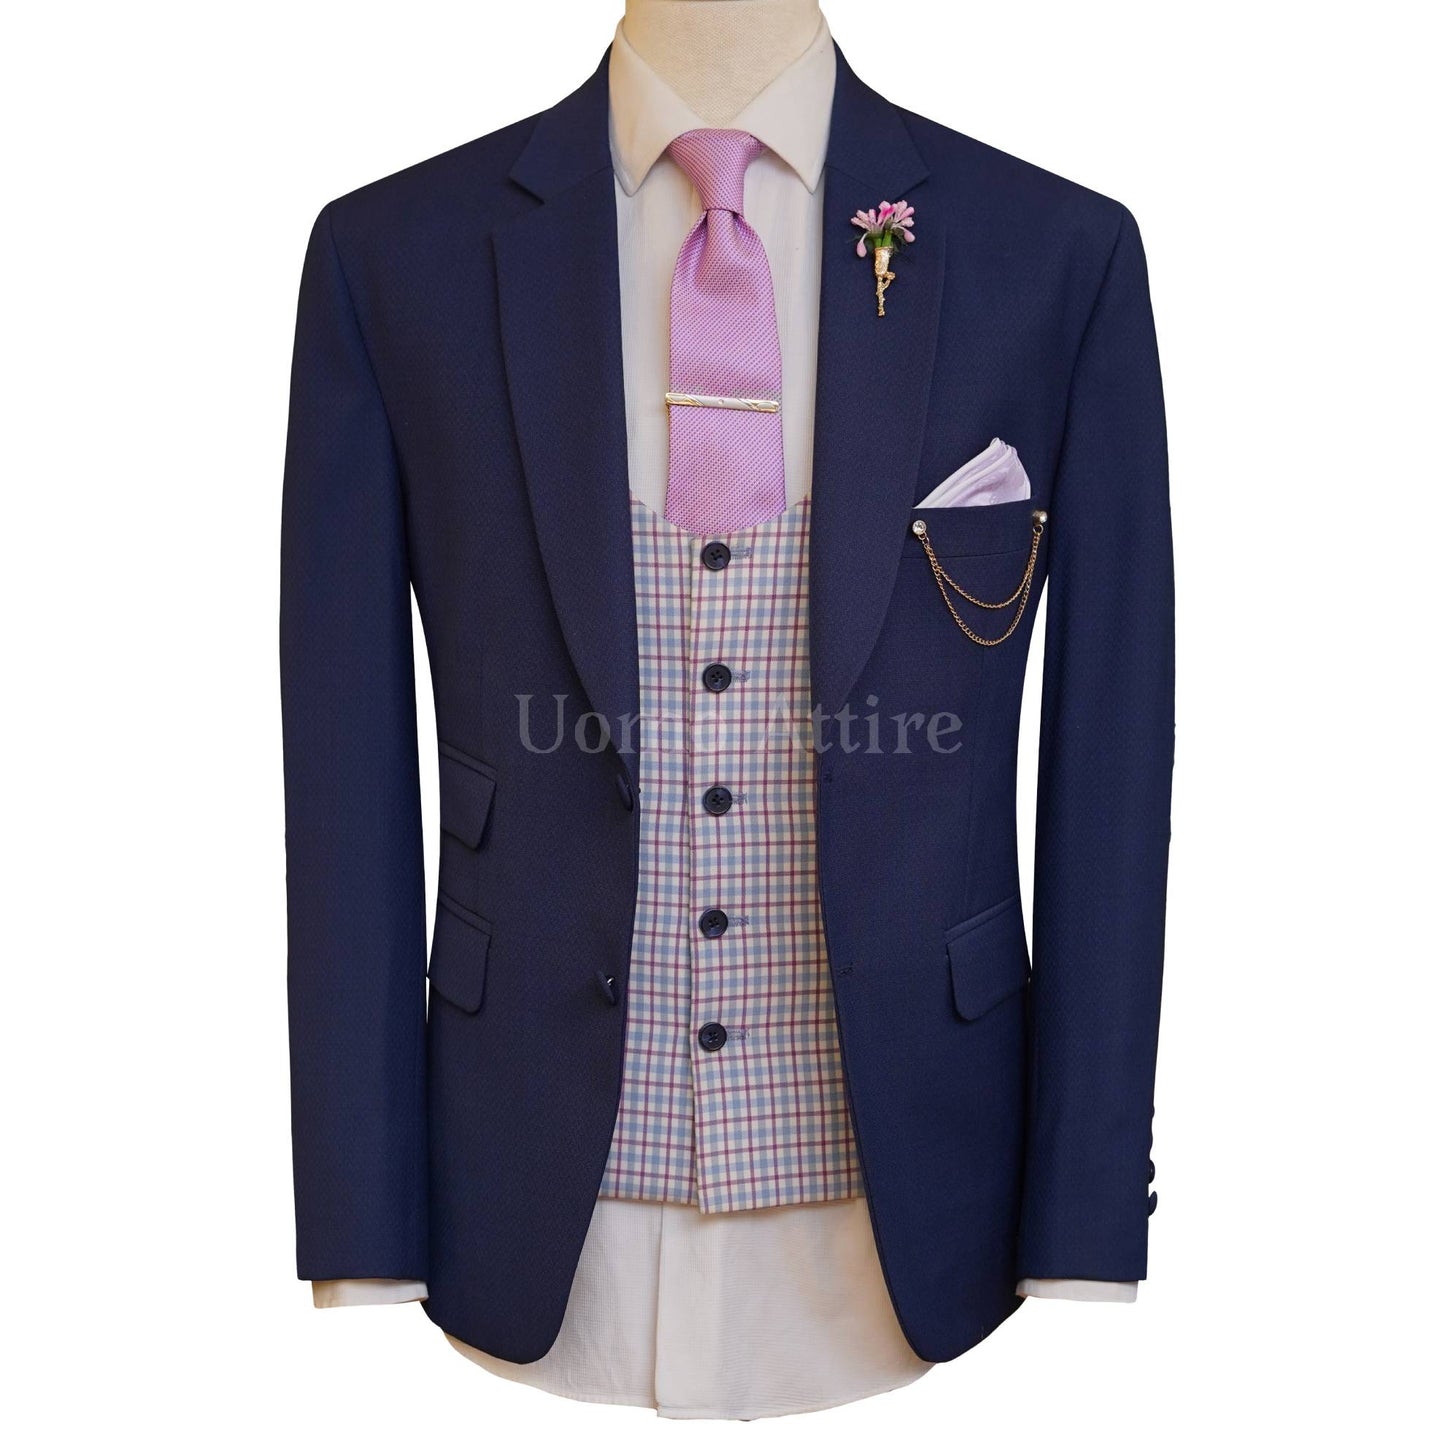 25 Wedding coat pant for man ideas | wedding suits men, wedding suits,  wedding men